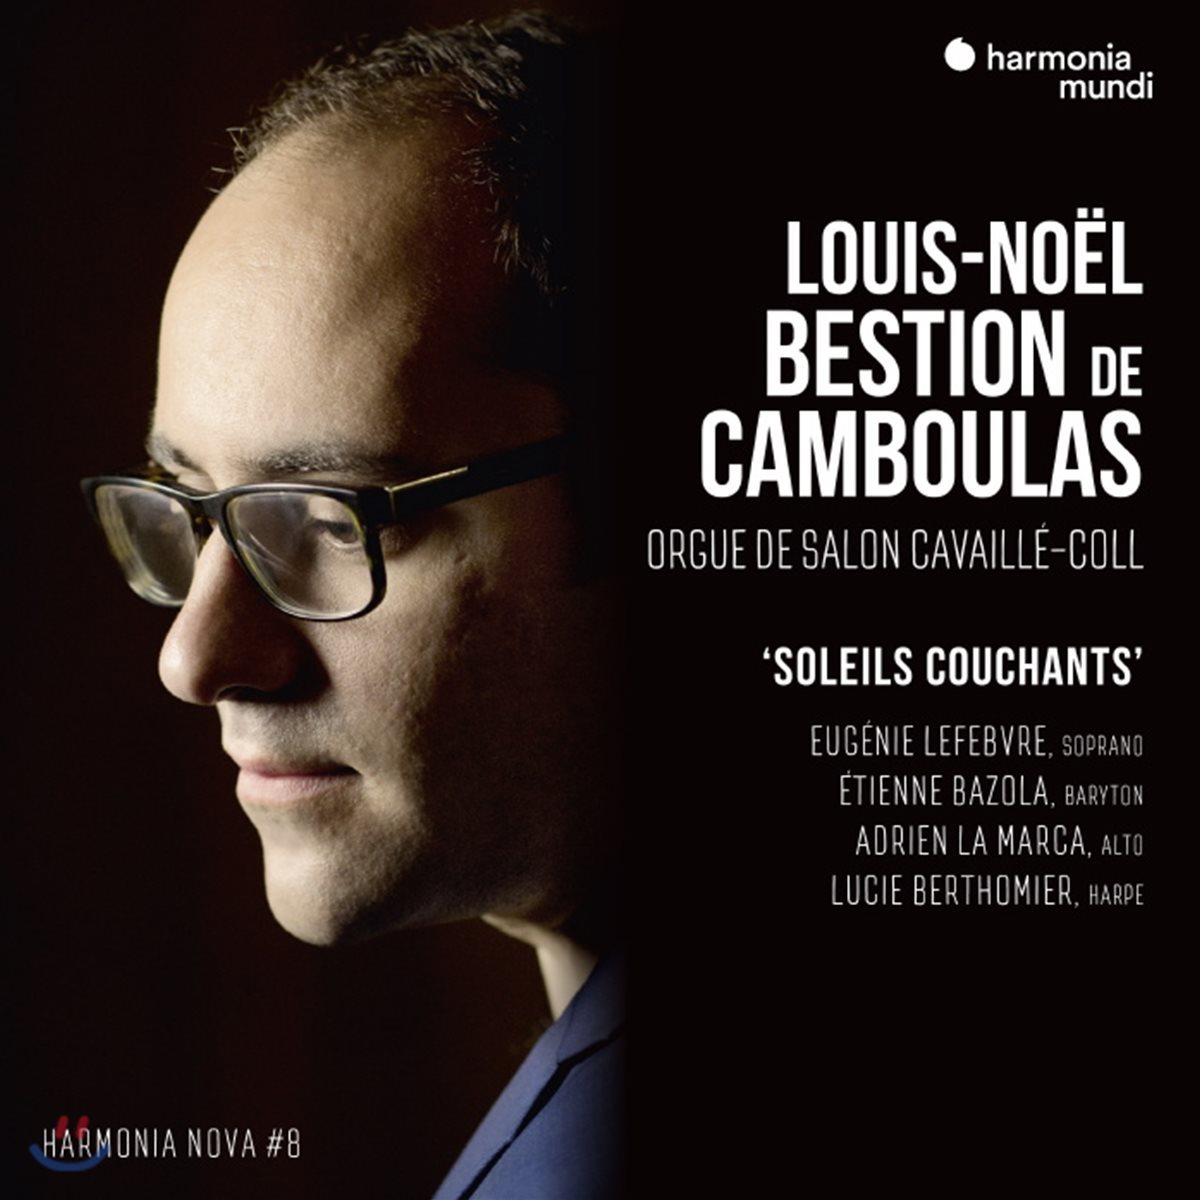 Louis-Noel Bestion de Camboulas 루이-노엘 베스티옹 드 캄불라 오르간 연주집 (Soleils couchants)